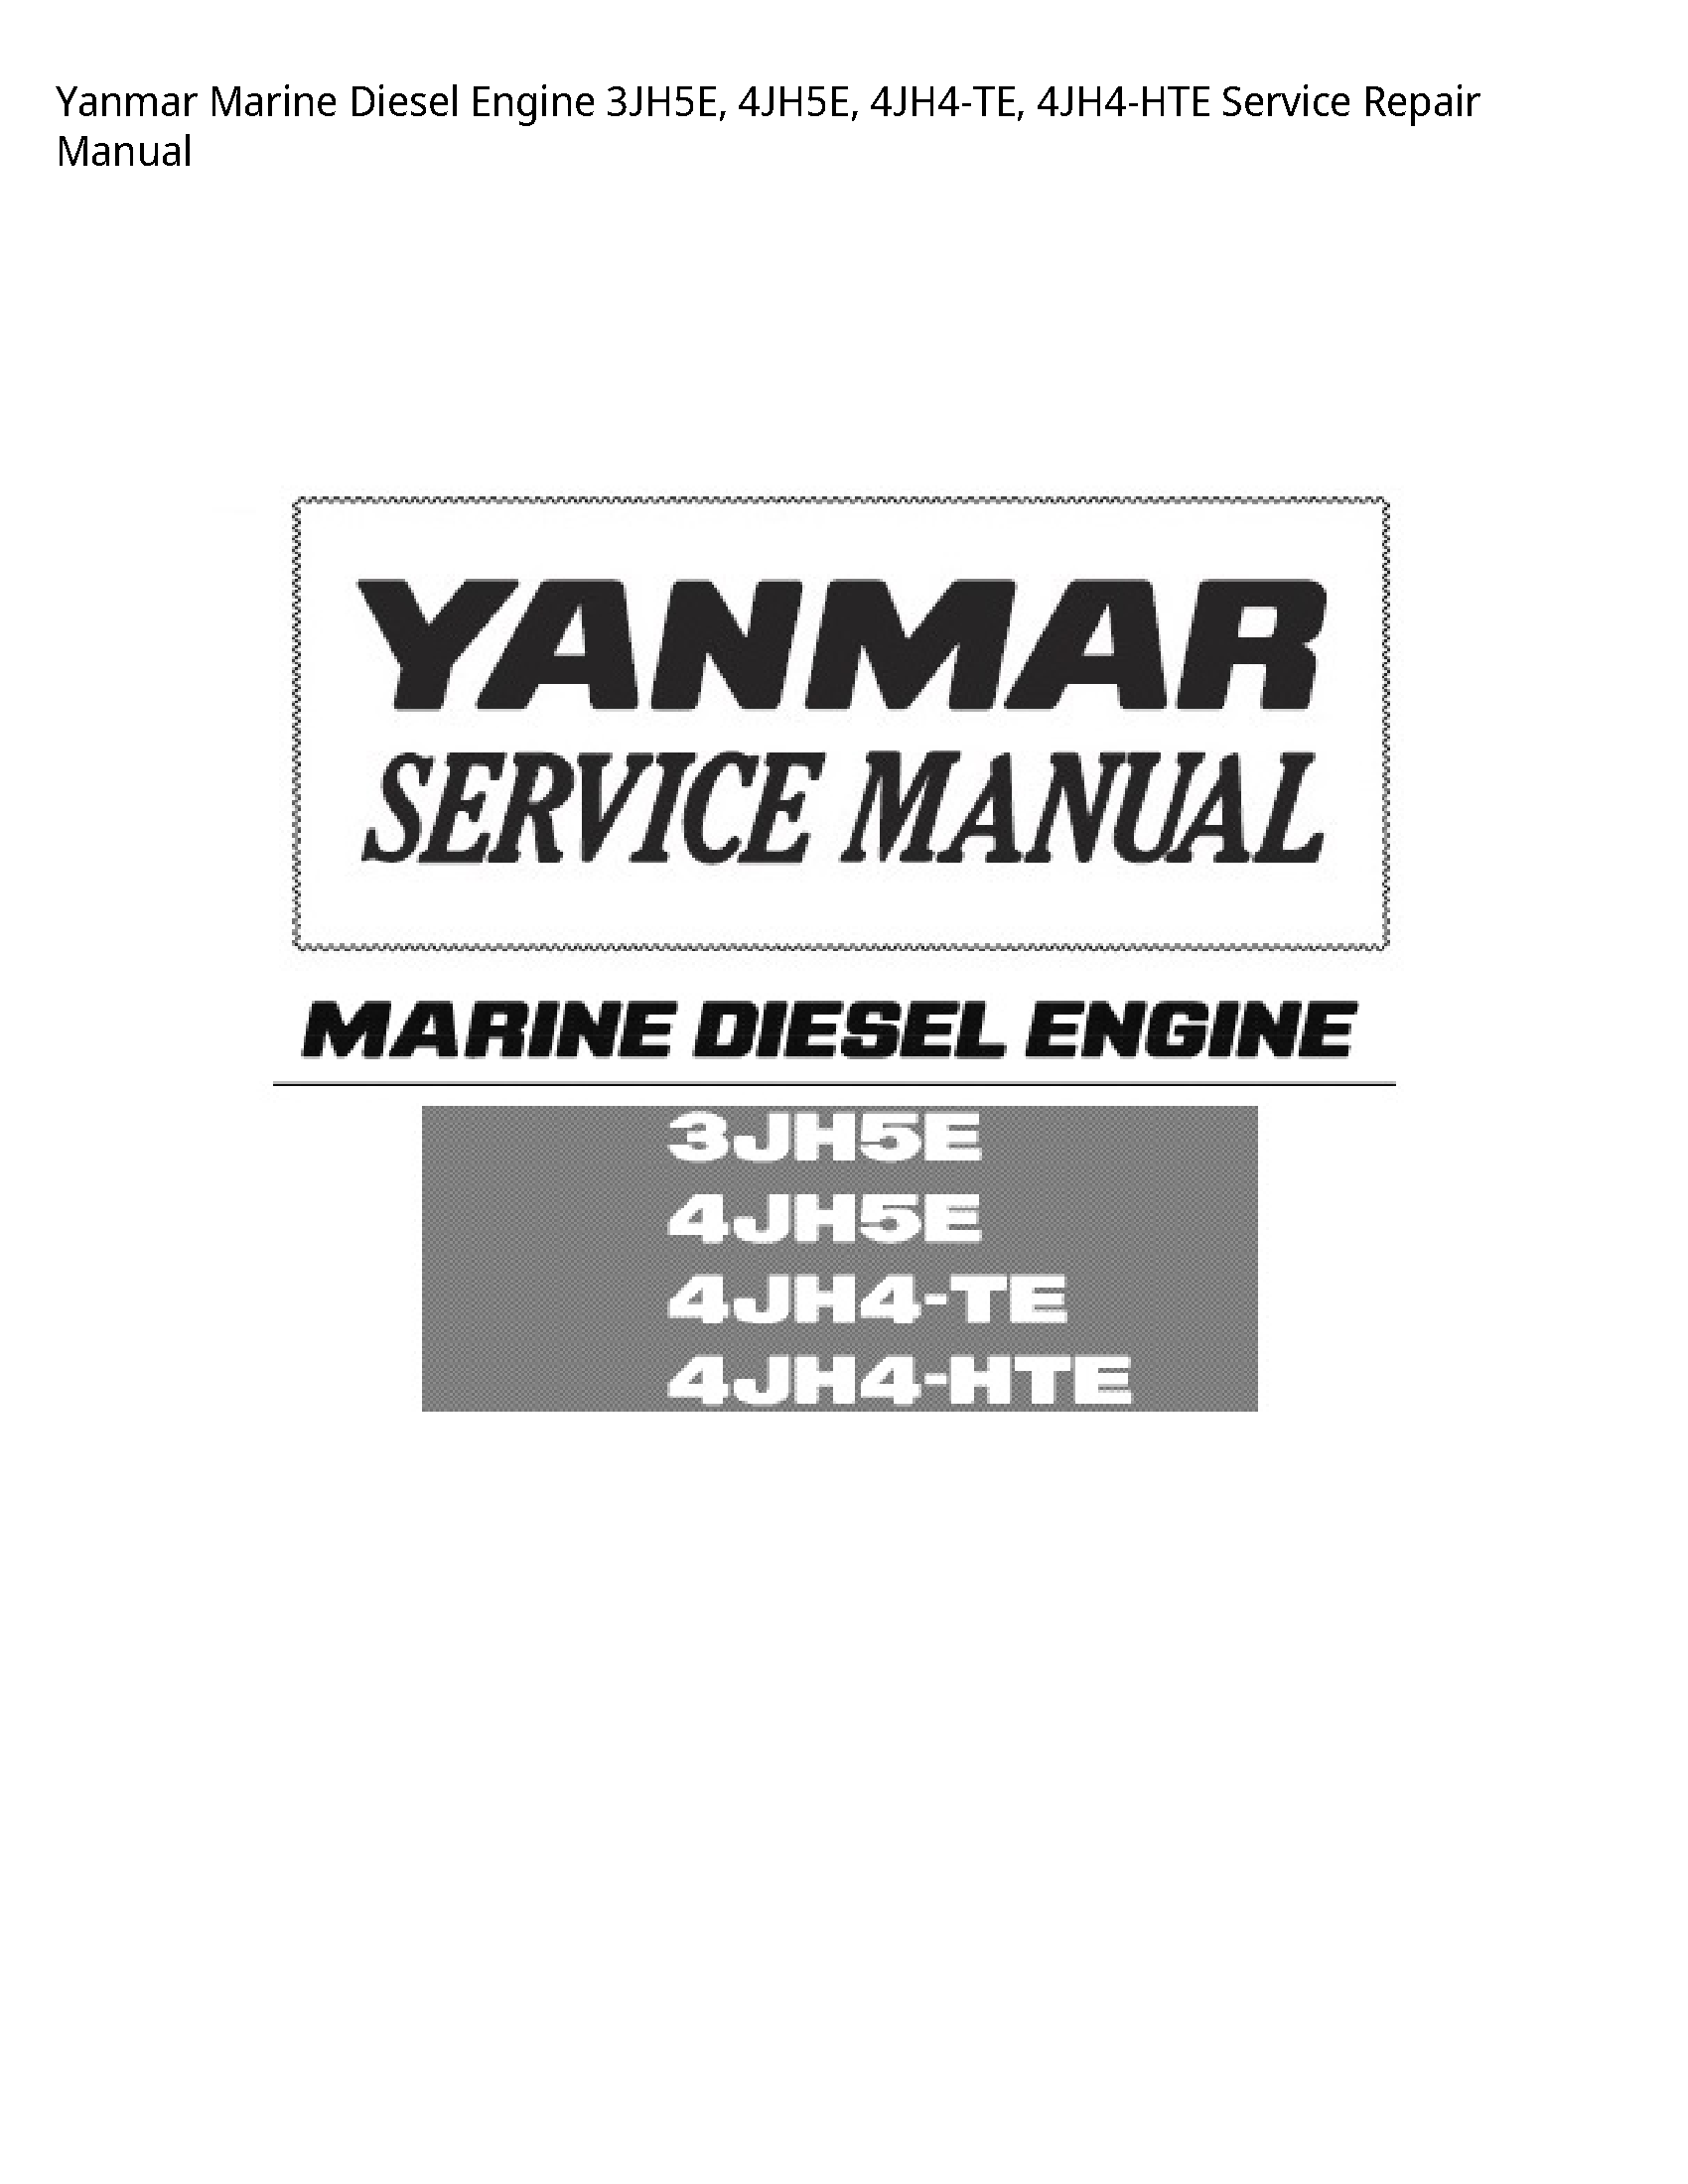 Yanmar 3JH5E Marine Diesel Engine manual